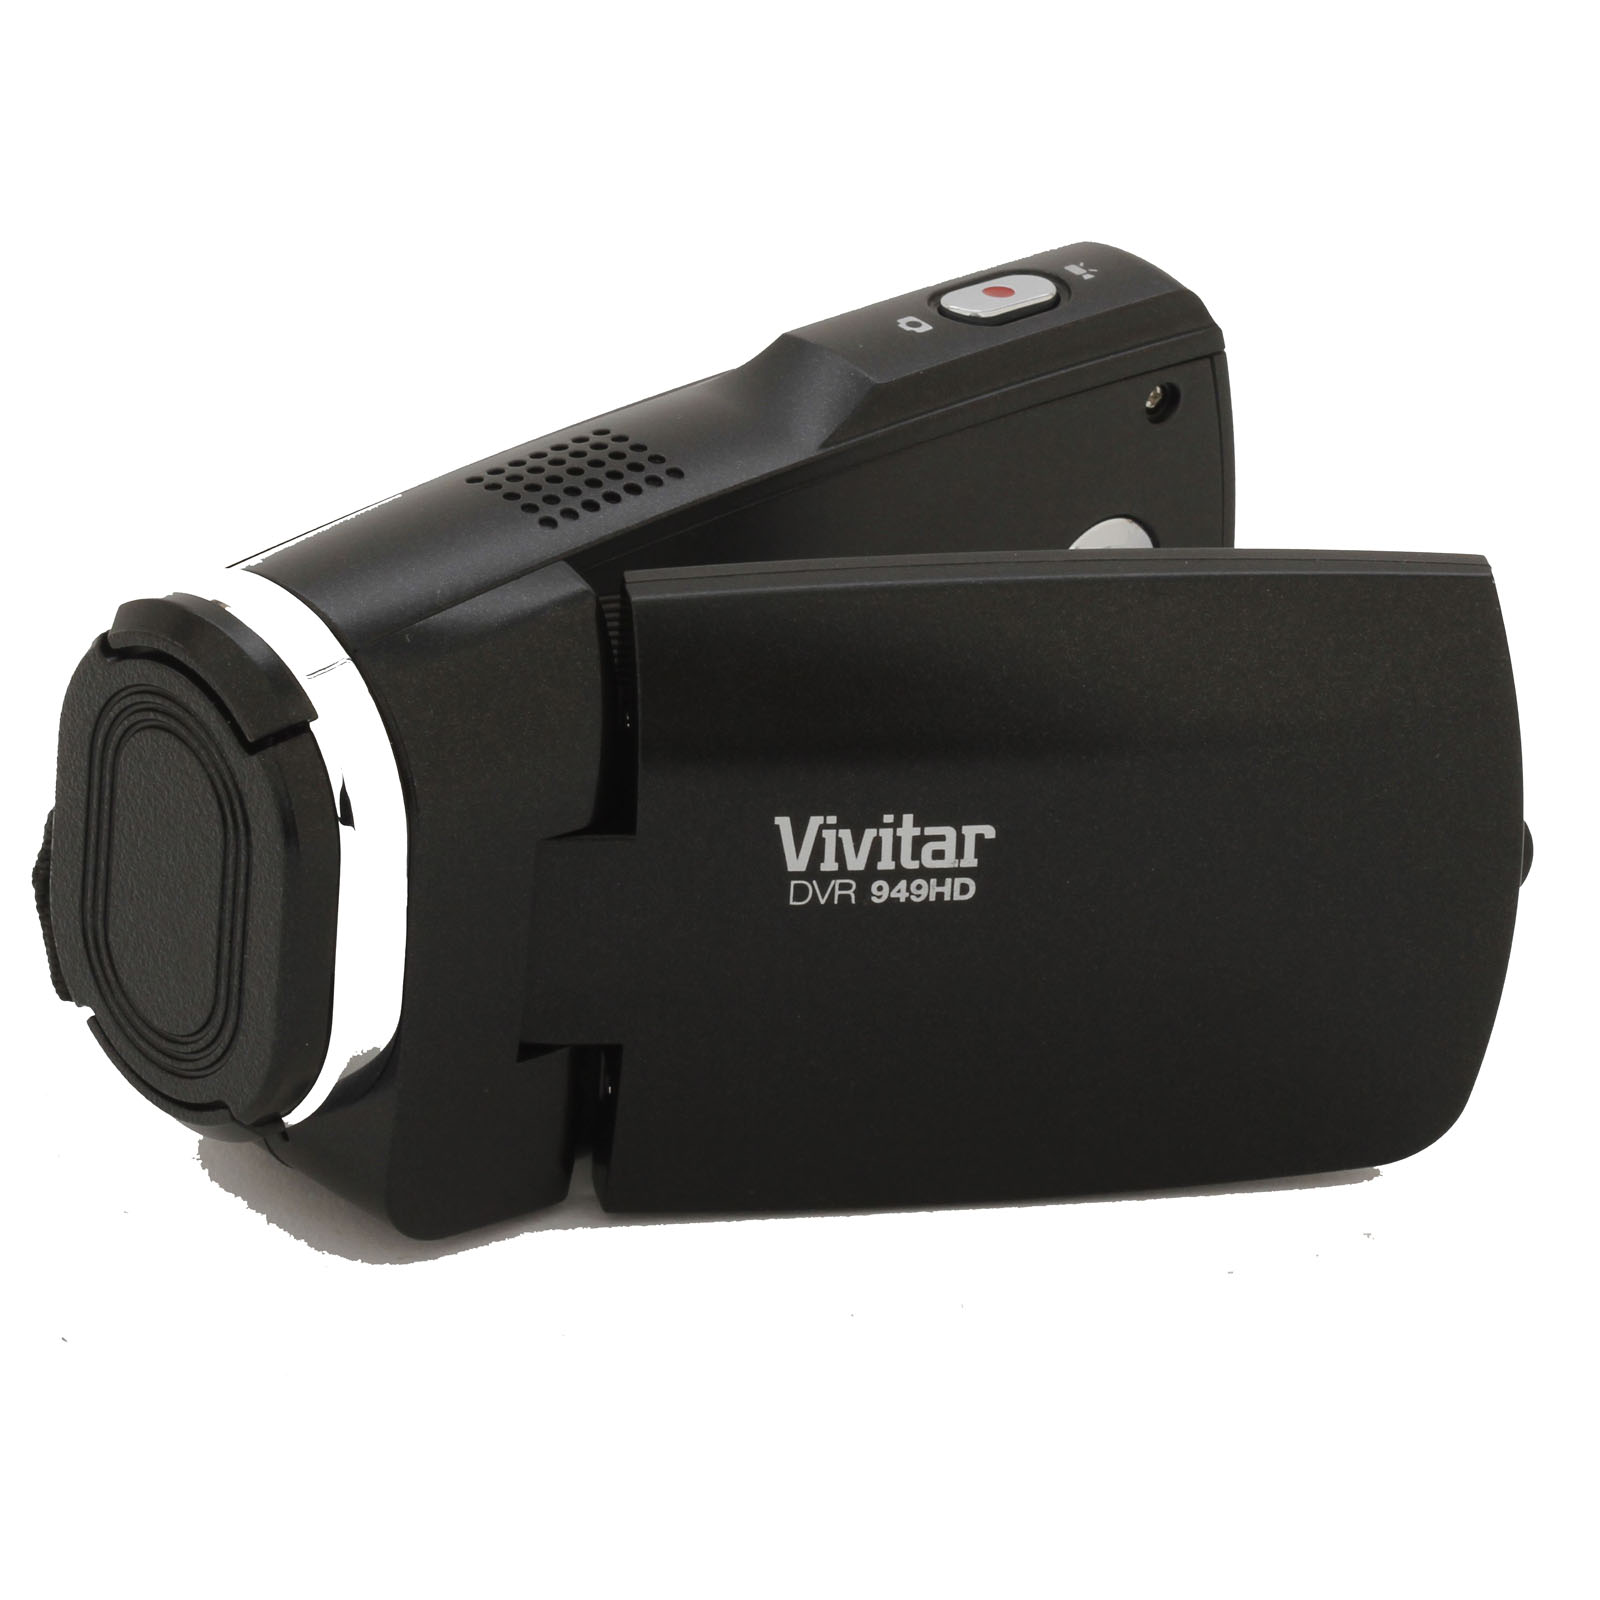 Vivitar 12.1MP Full HD Digital Camcorder - Black